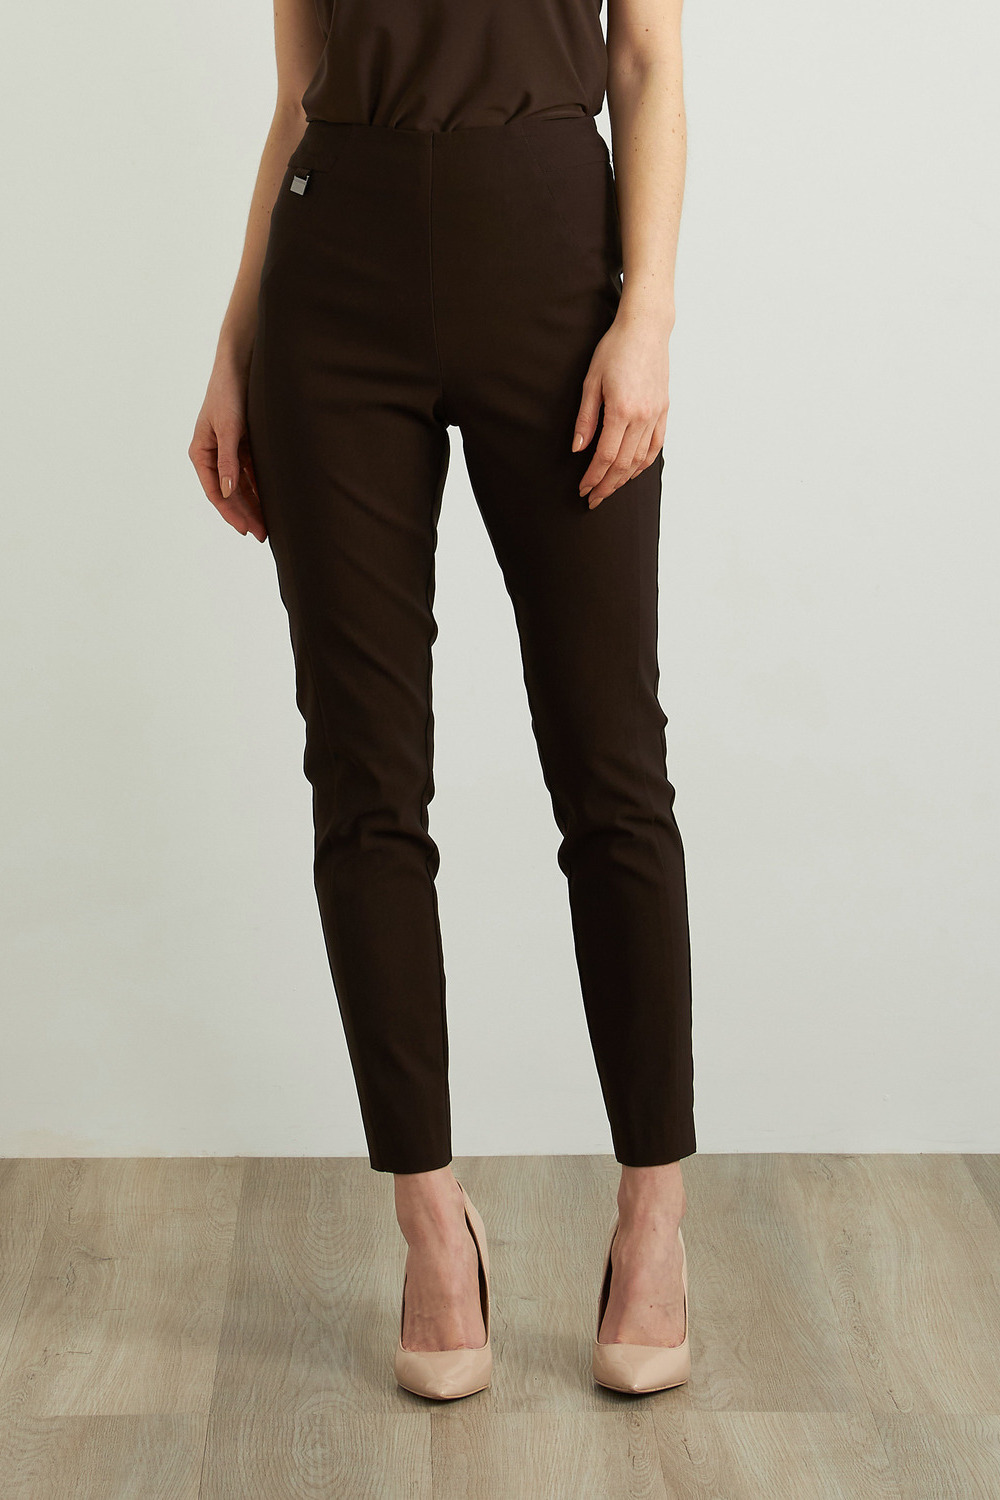 Joseph Ribkoff Slim Fit Pants Style 213702. Mocha